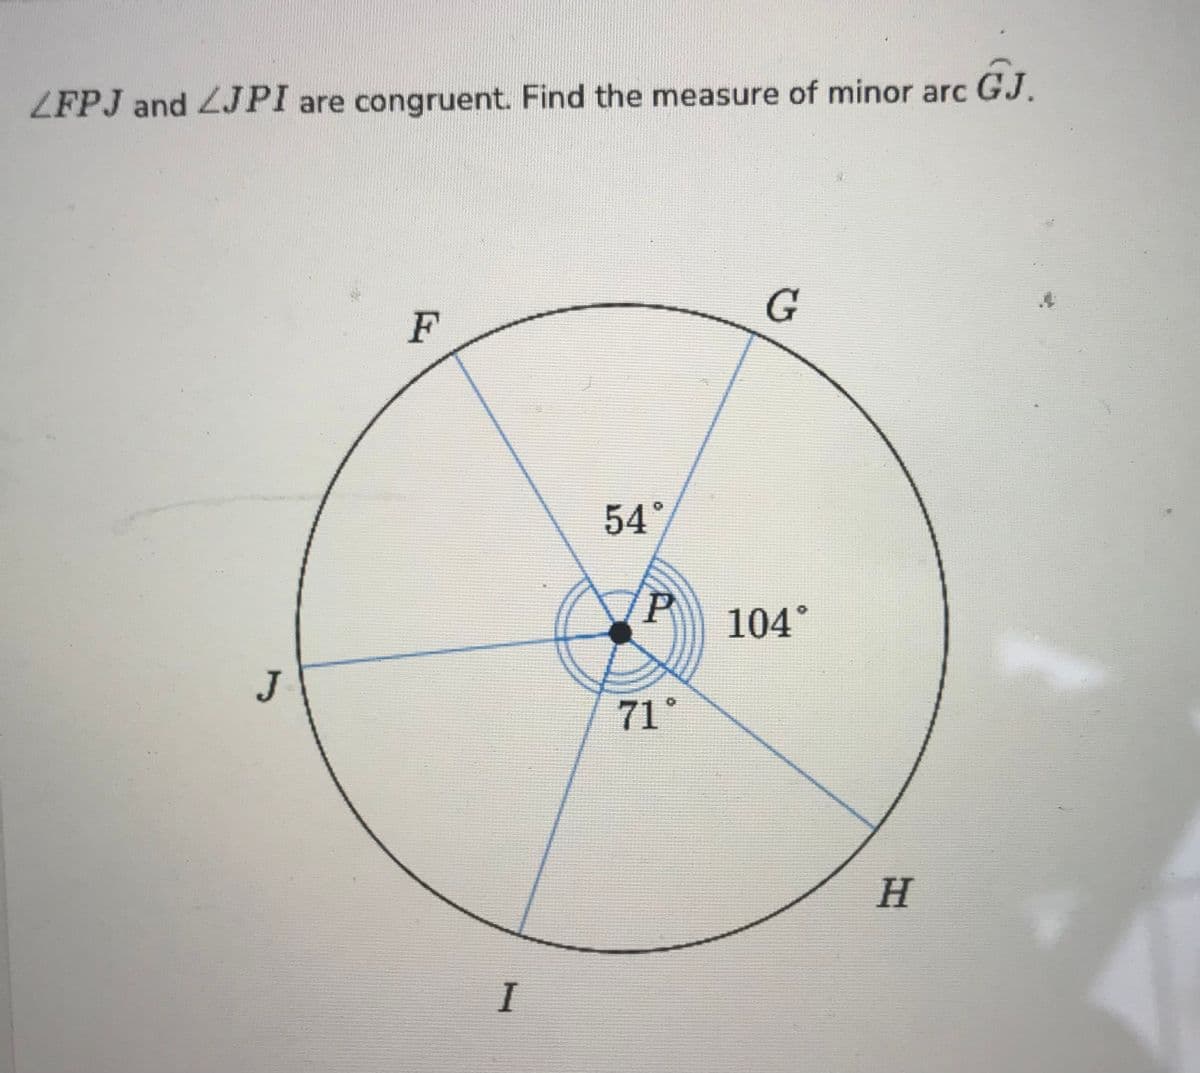 LFPJ and LJPI are congruent. Find the measure of minor arc GJ.
J
F
I
54°
P
71°
G
104°
H